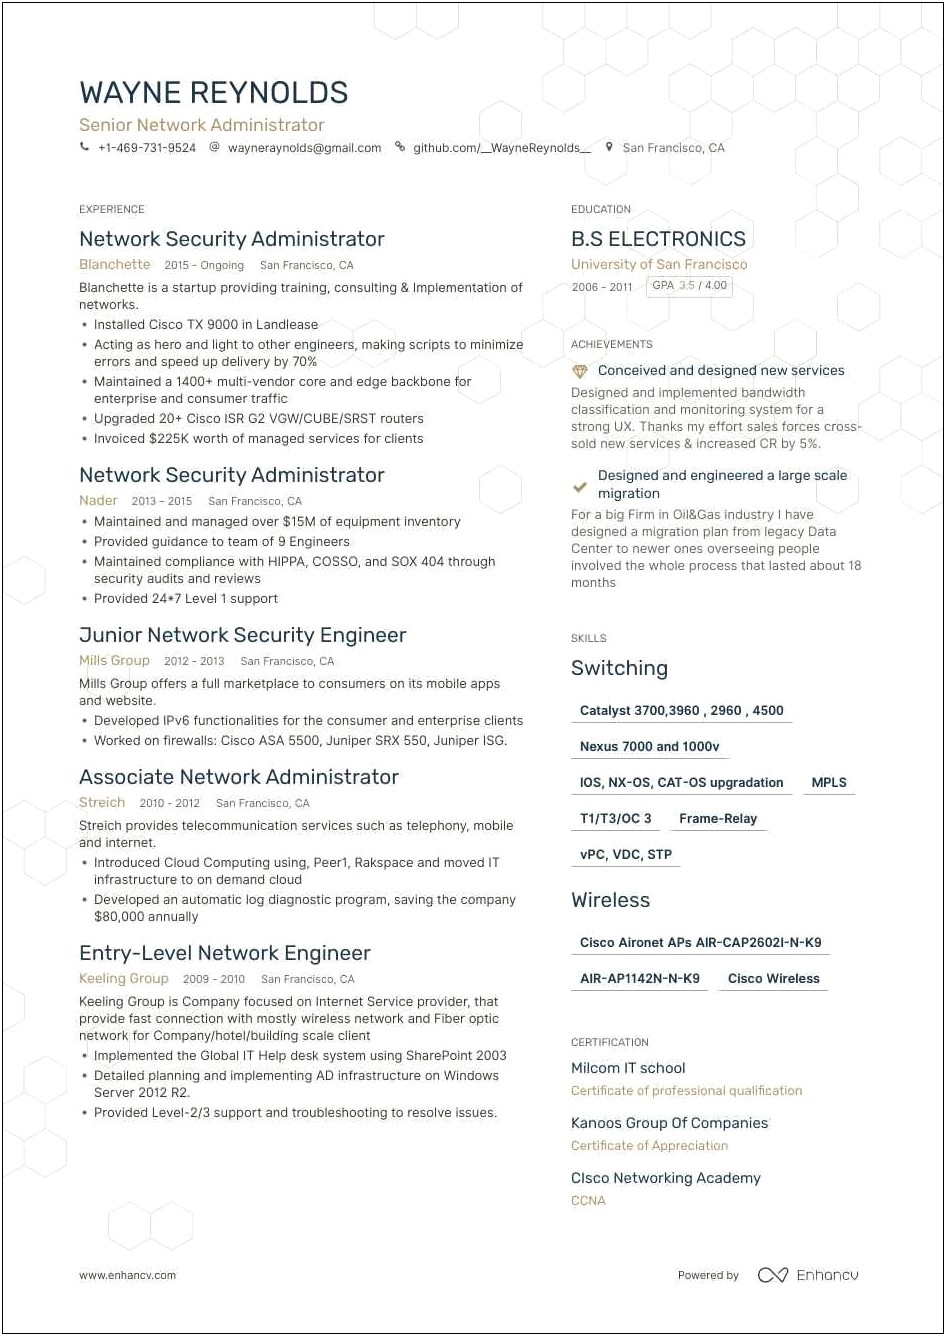 Dice Sample Resume Network Administrator